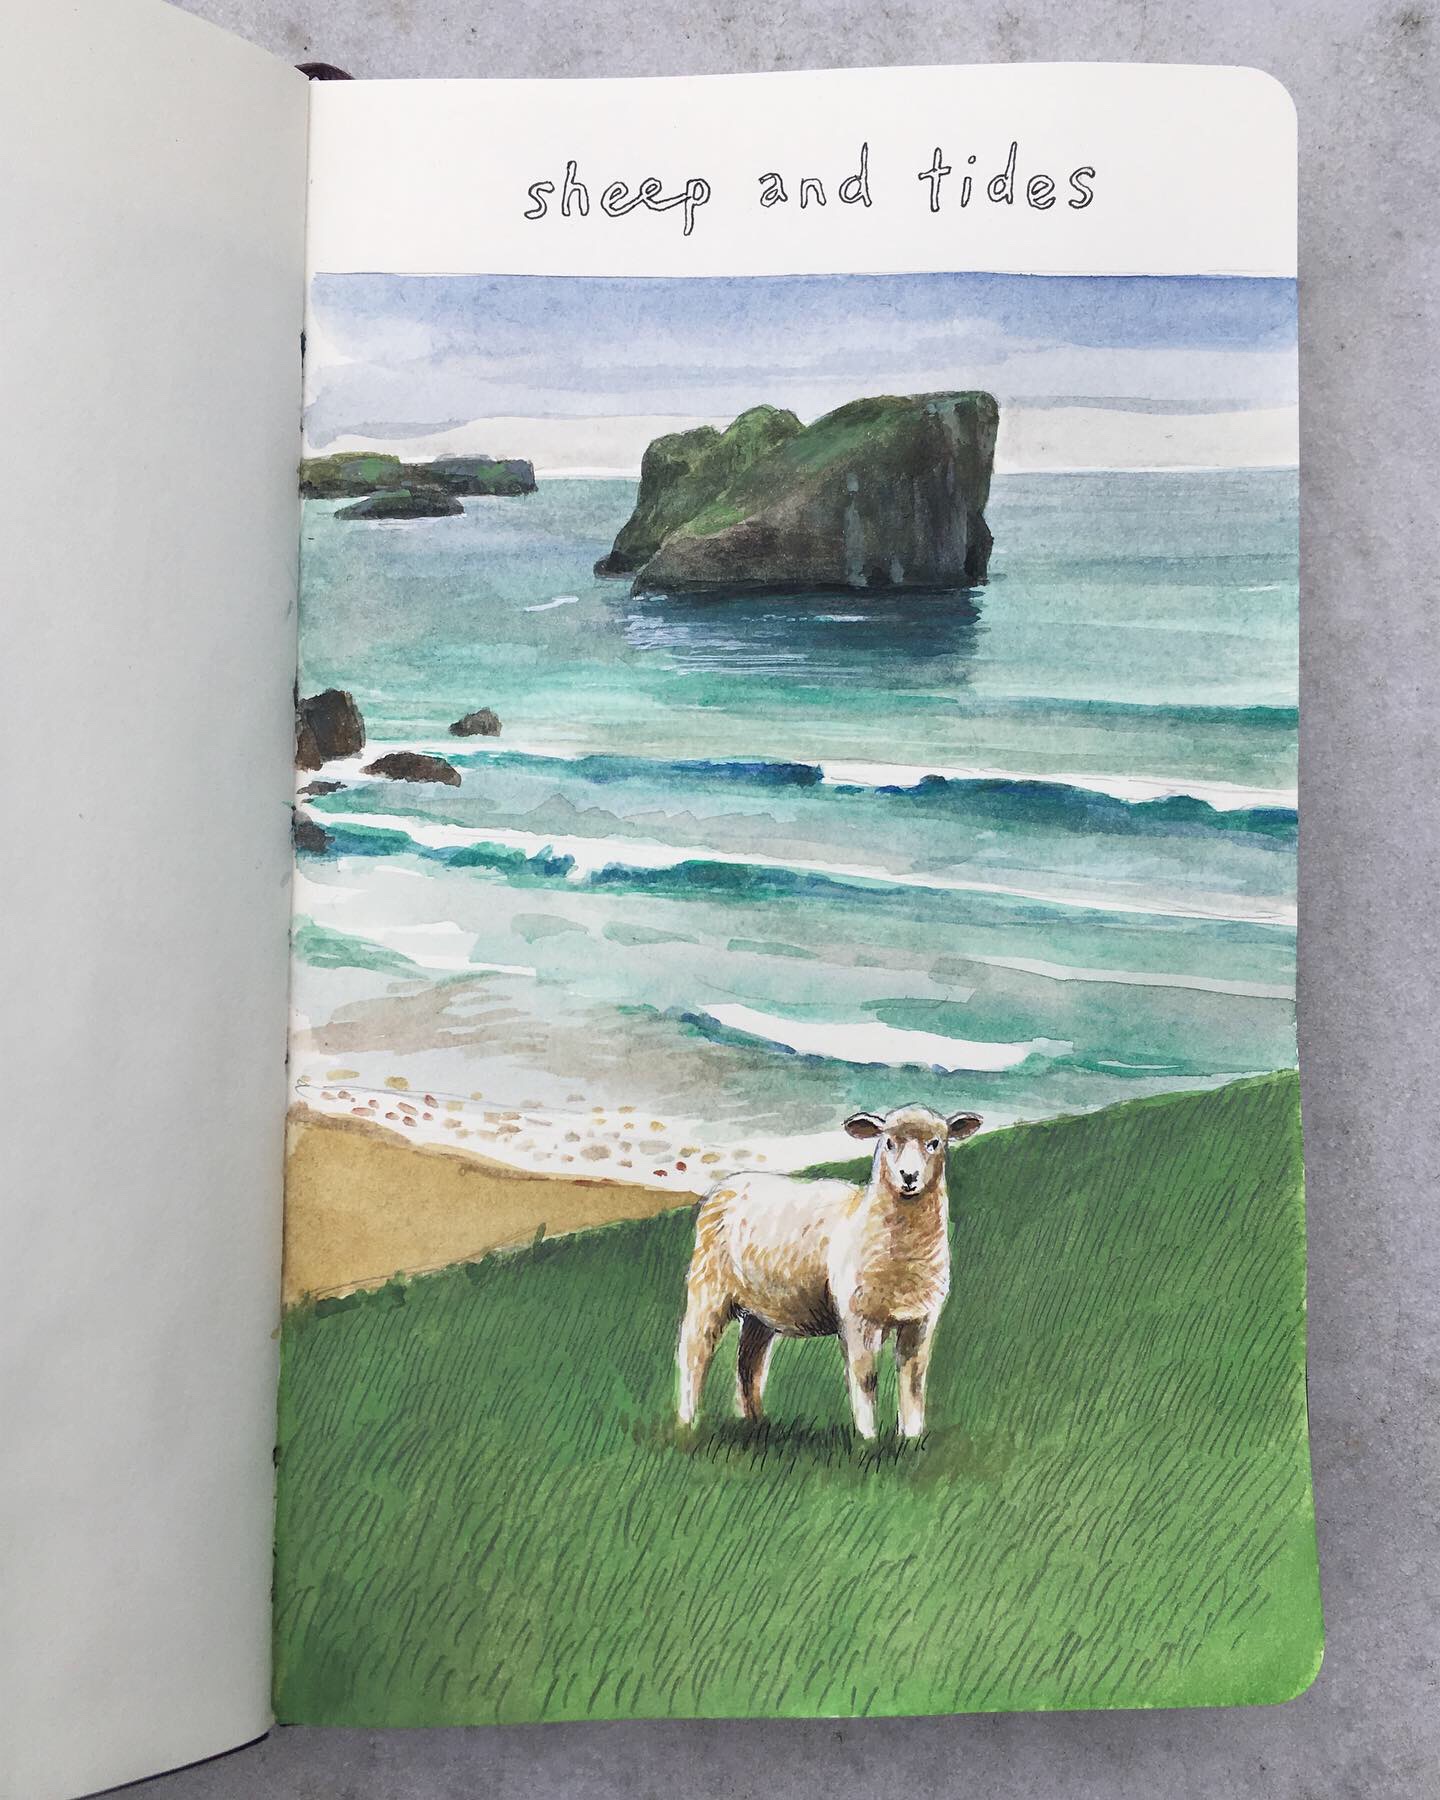 Sheep and tides